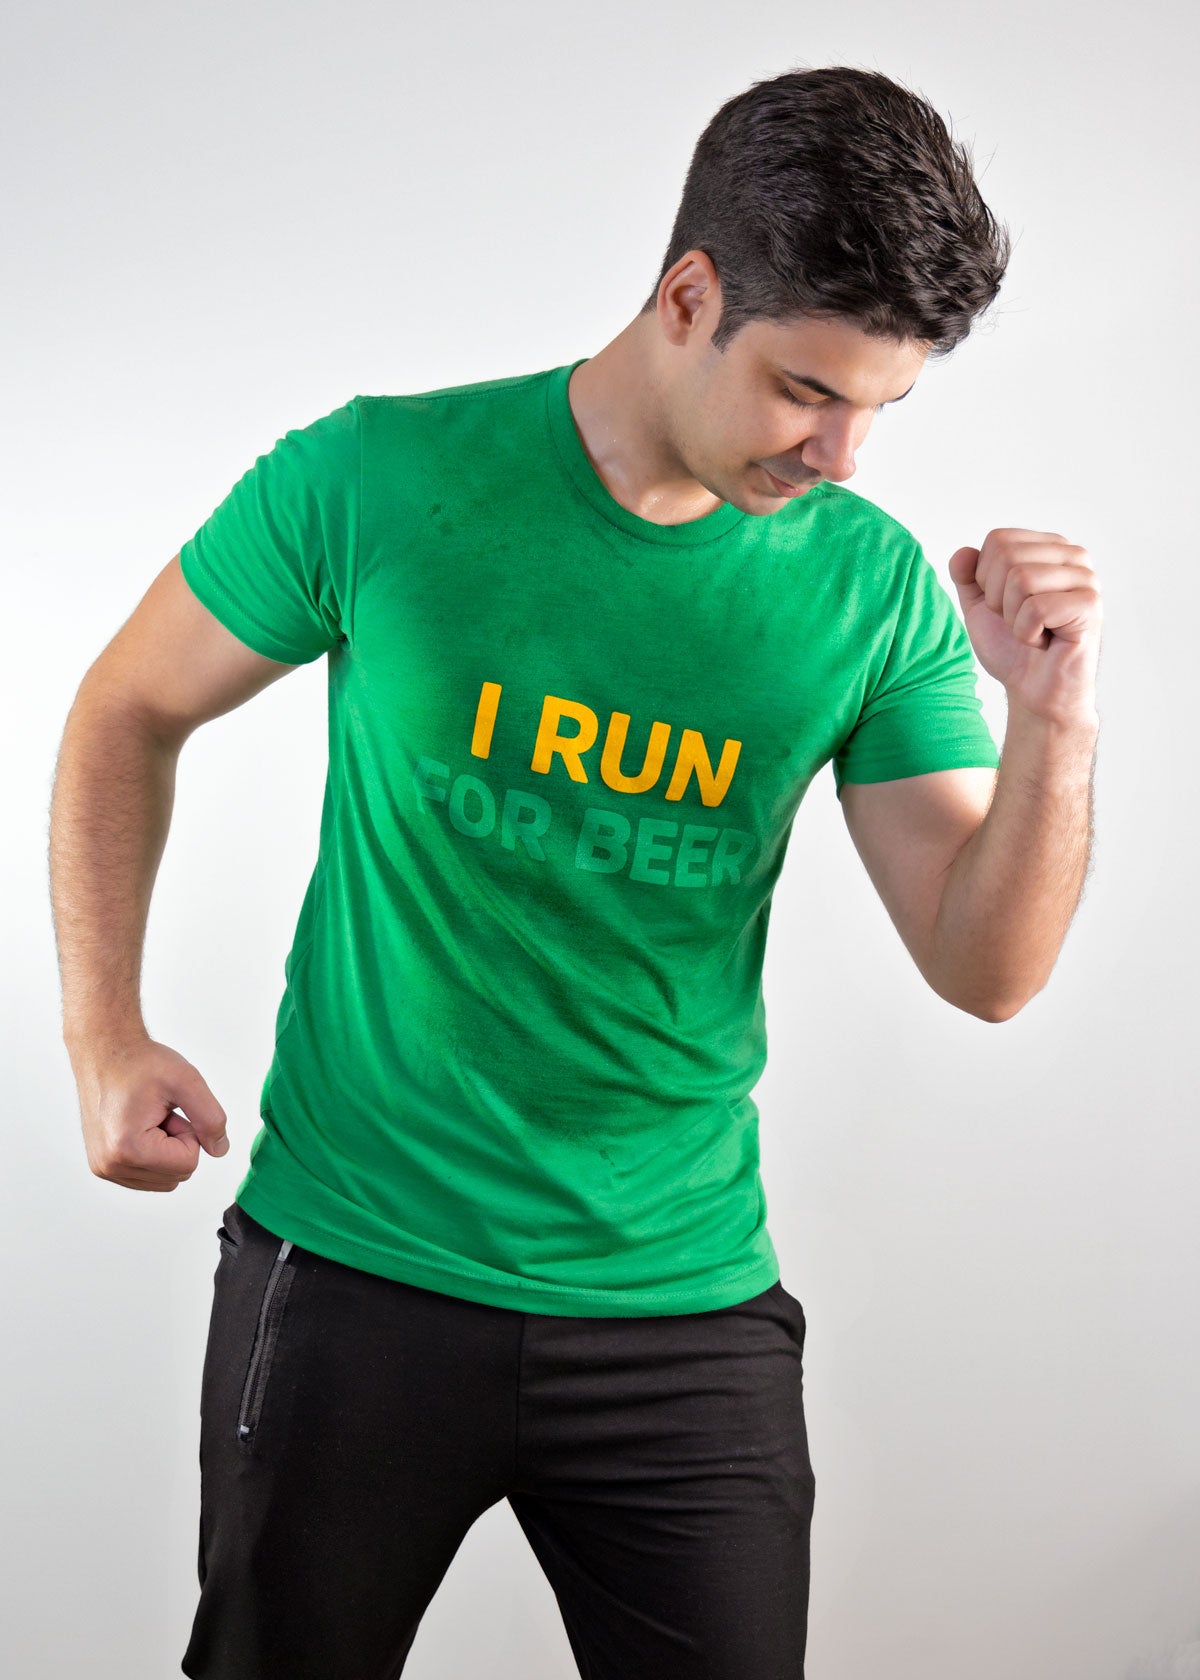 I Hate Running Heart Shirt, Funny Cardio Shirt, Love Running T